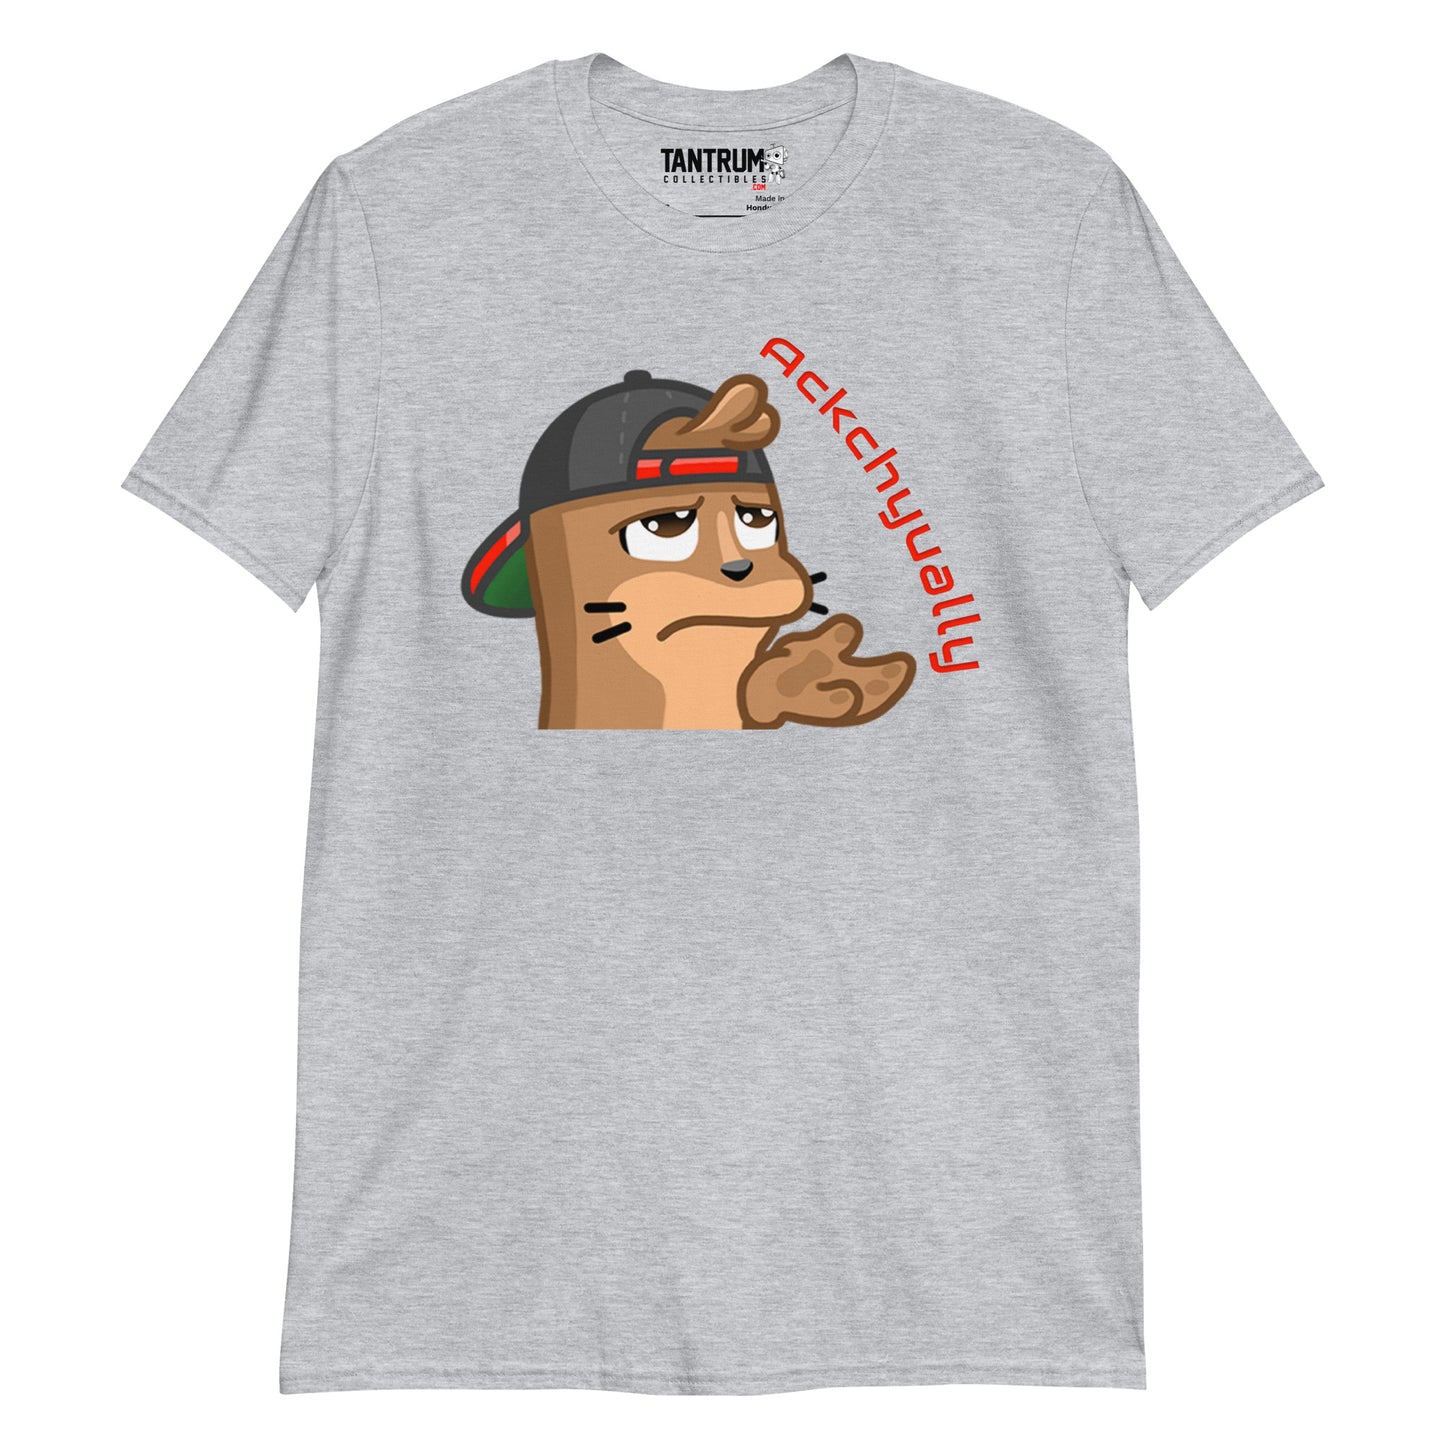 Chambo - Unisex T-Shirt - "Ackchyually" (Streamer Purchase)